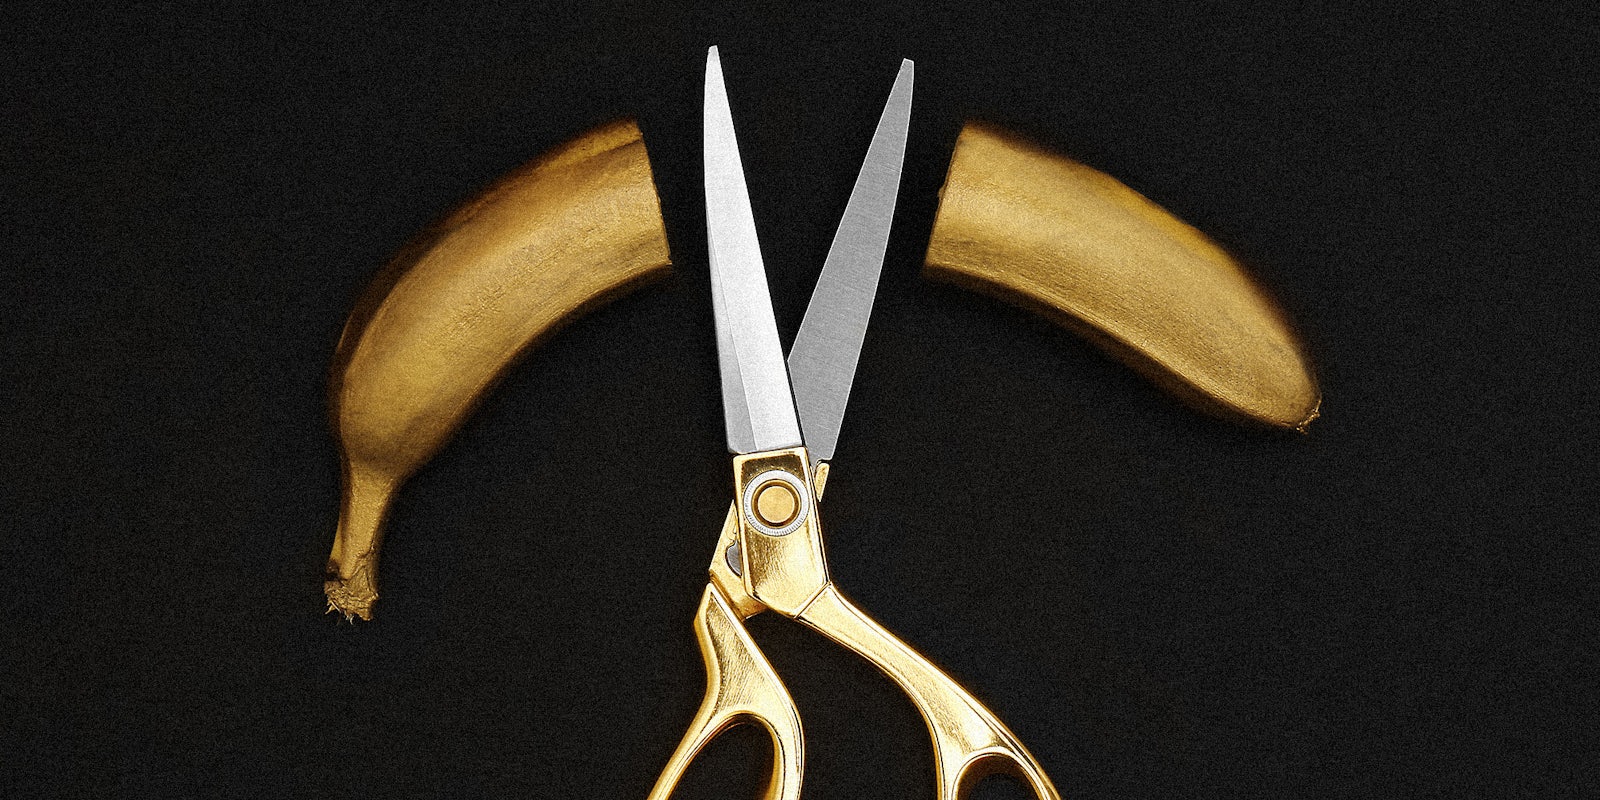 A banana cut with scissors.